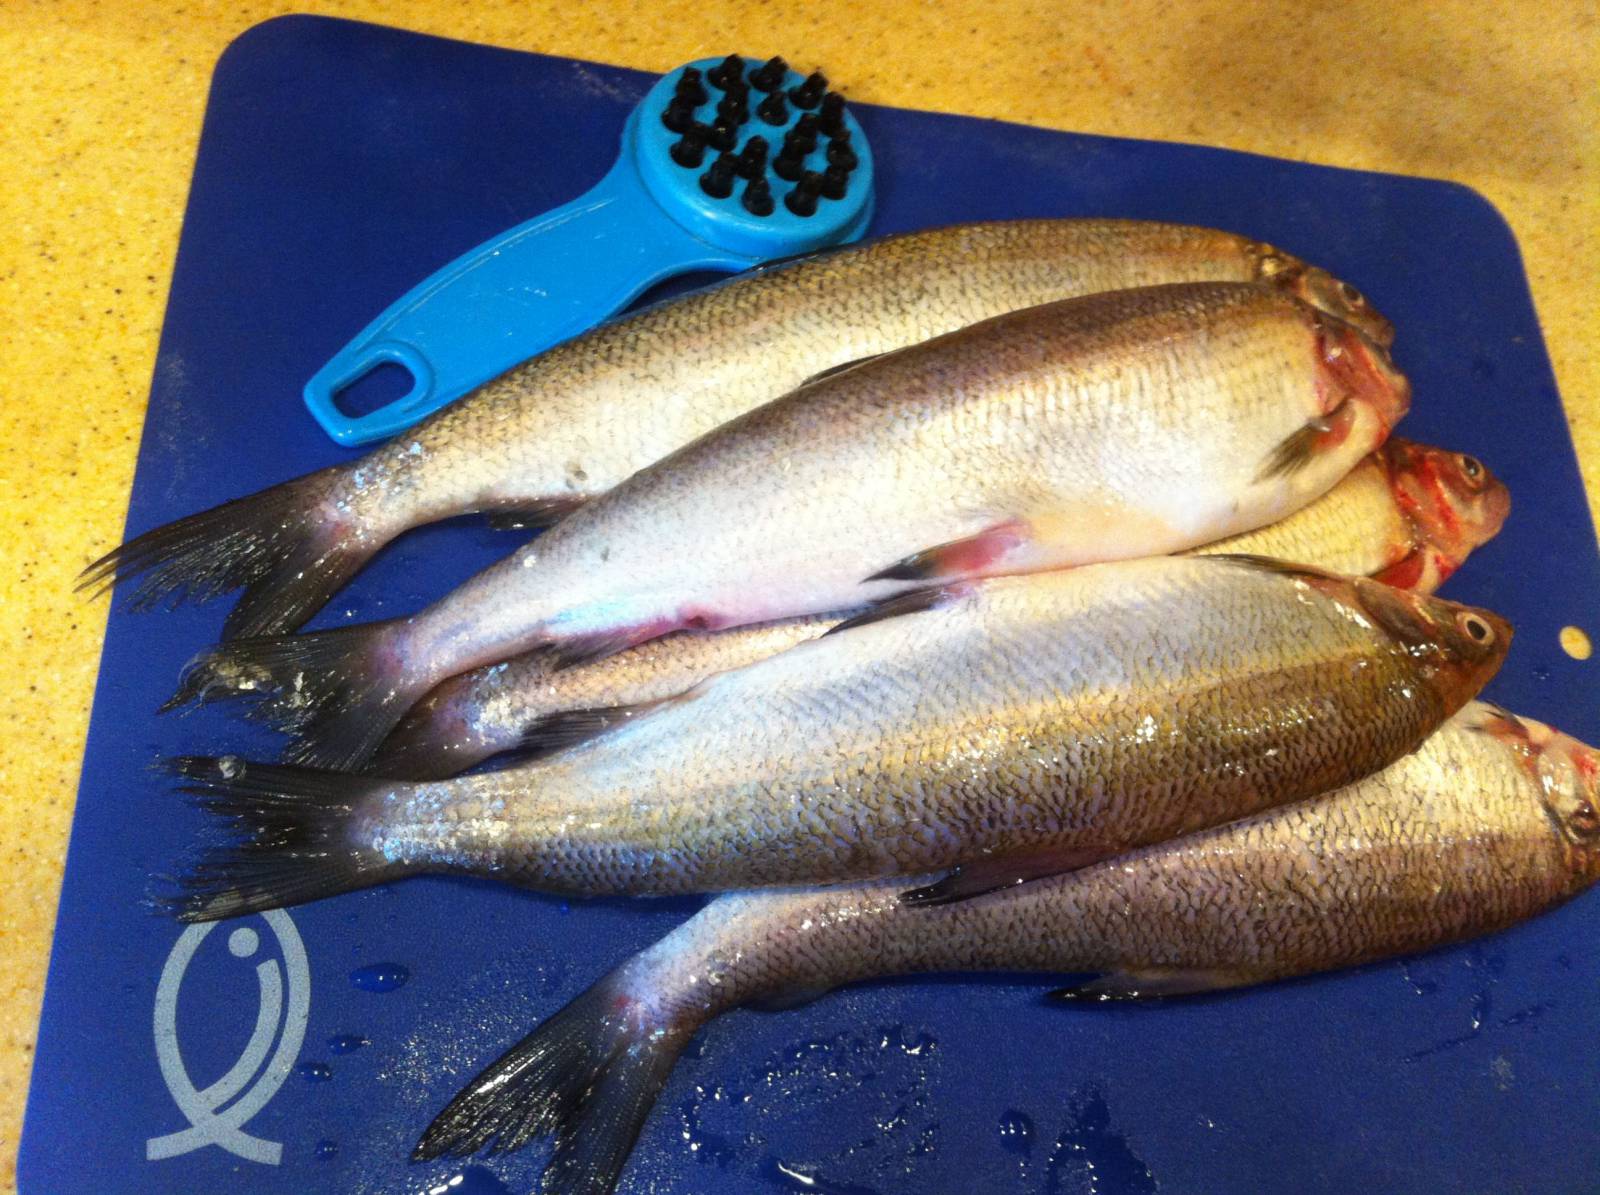 Fish scalers